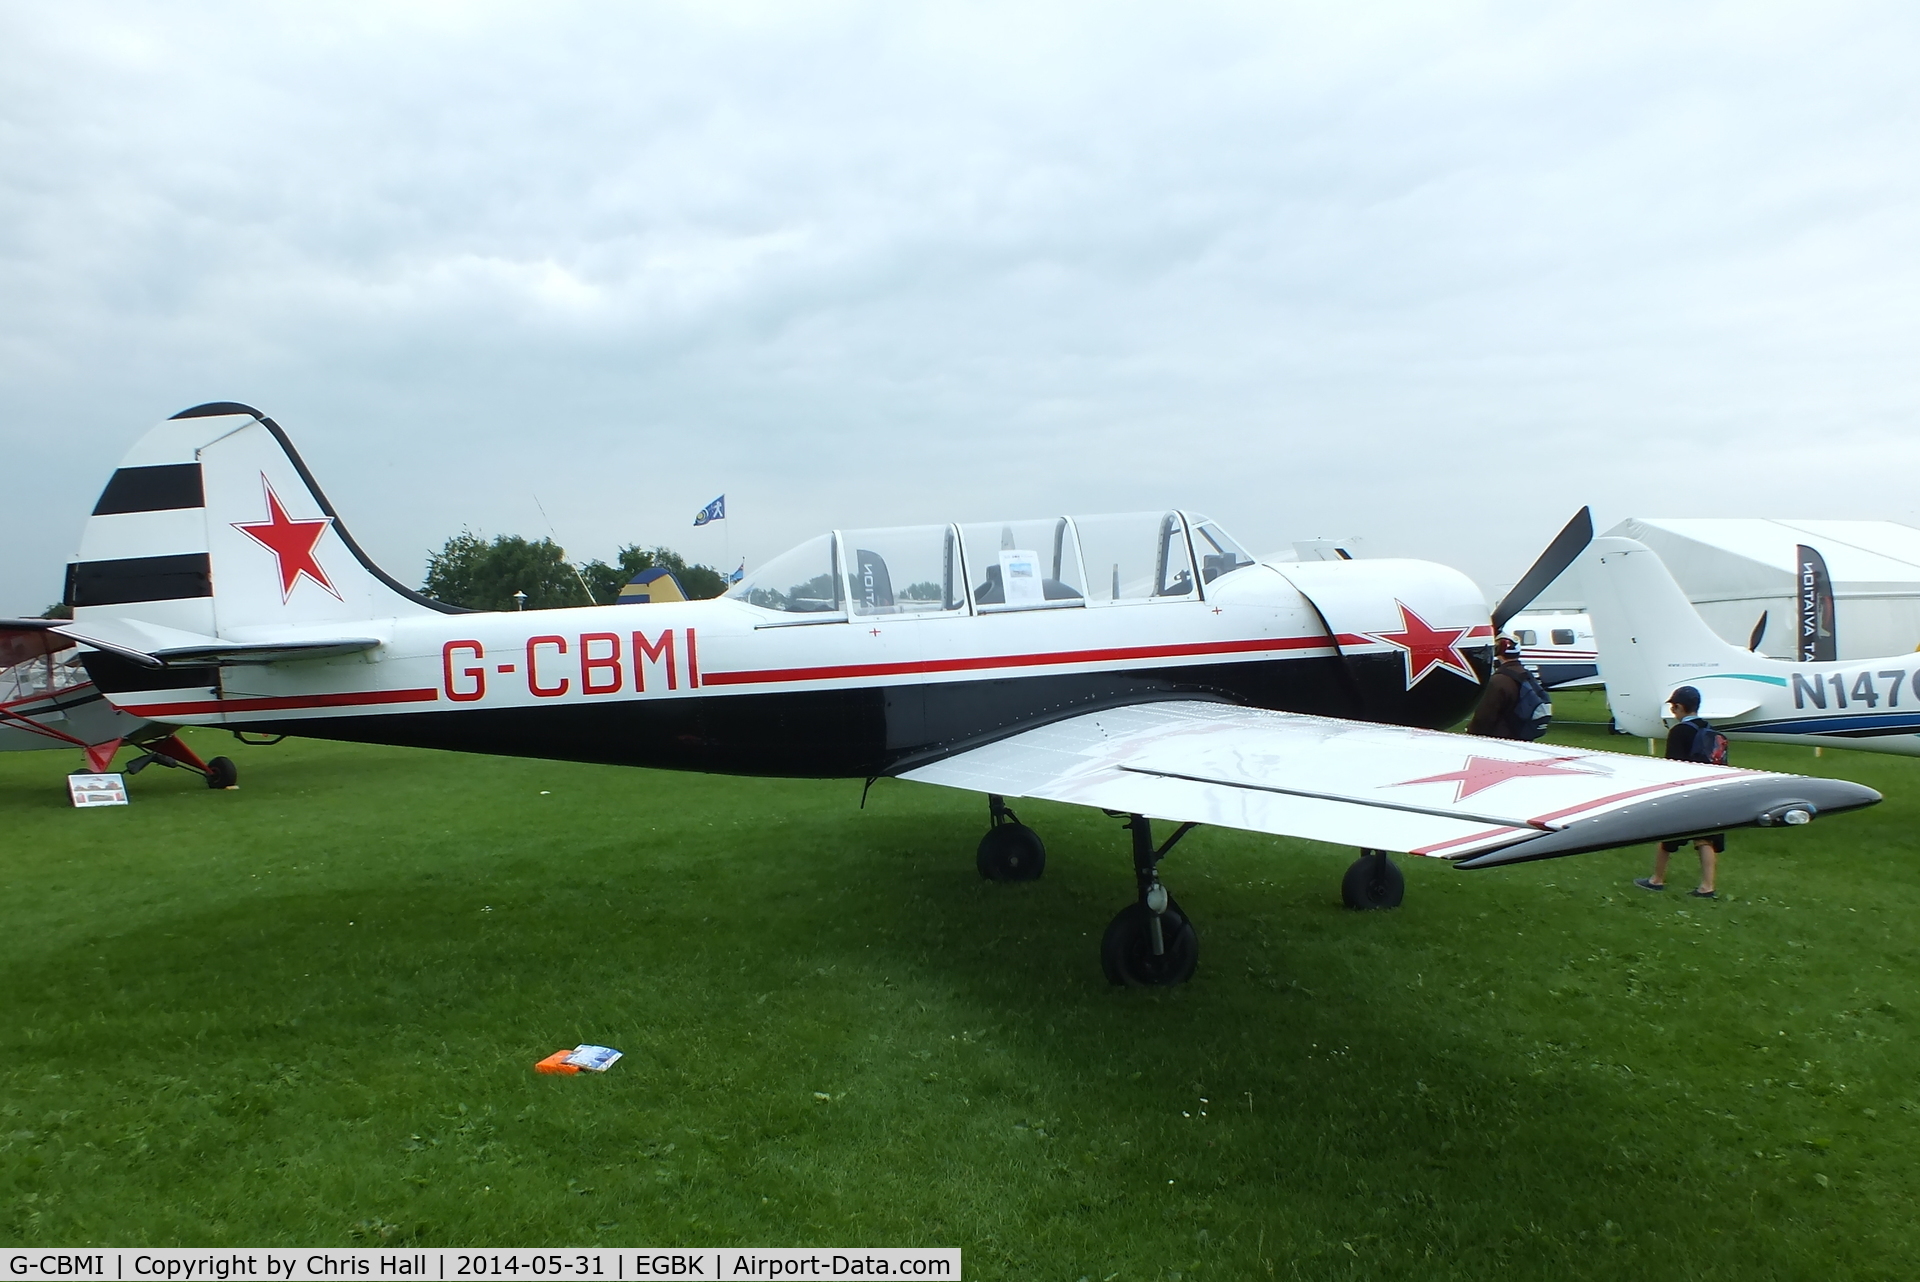 G-CBMI, 1985 Bacau Yak-52 C/N 855907, at AeroExpo 2014